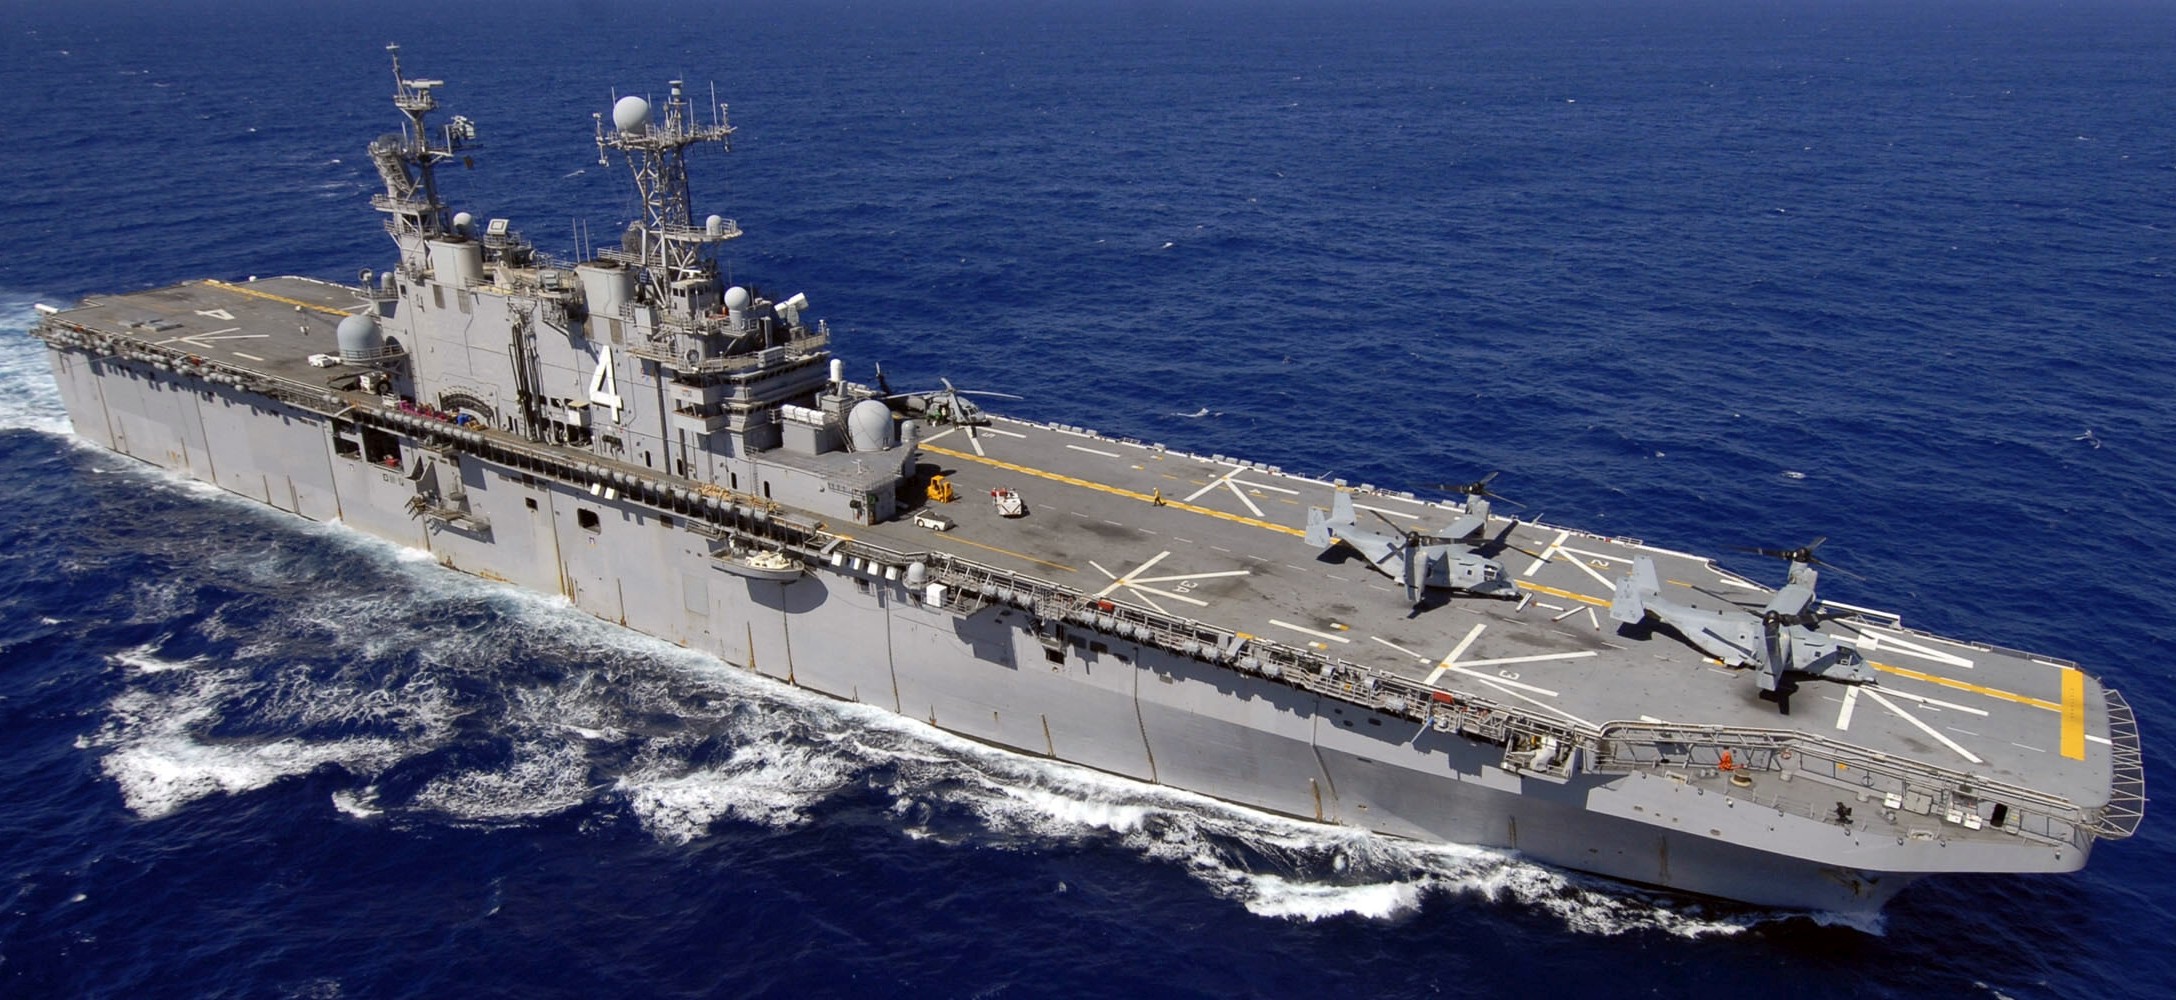 lha-4 uss nassau tarawa class amphibious assault ship us navy 27 ingalls shipbuilding